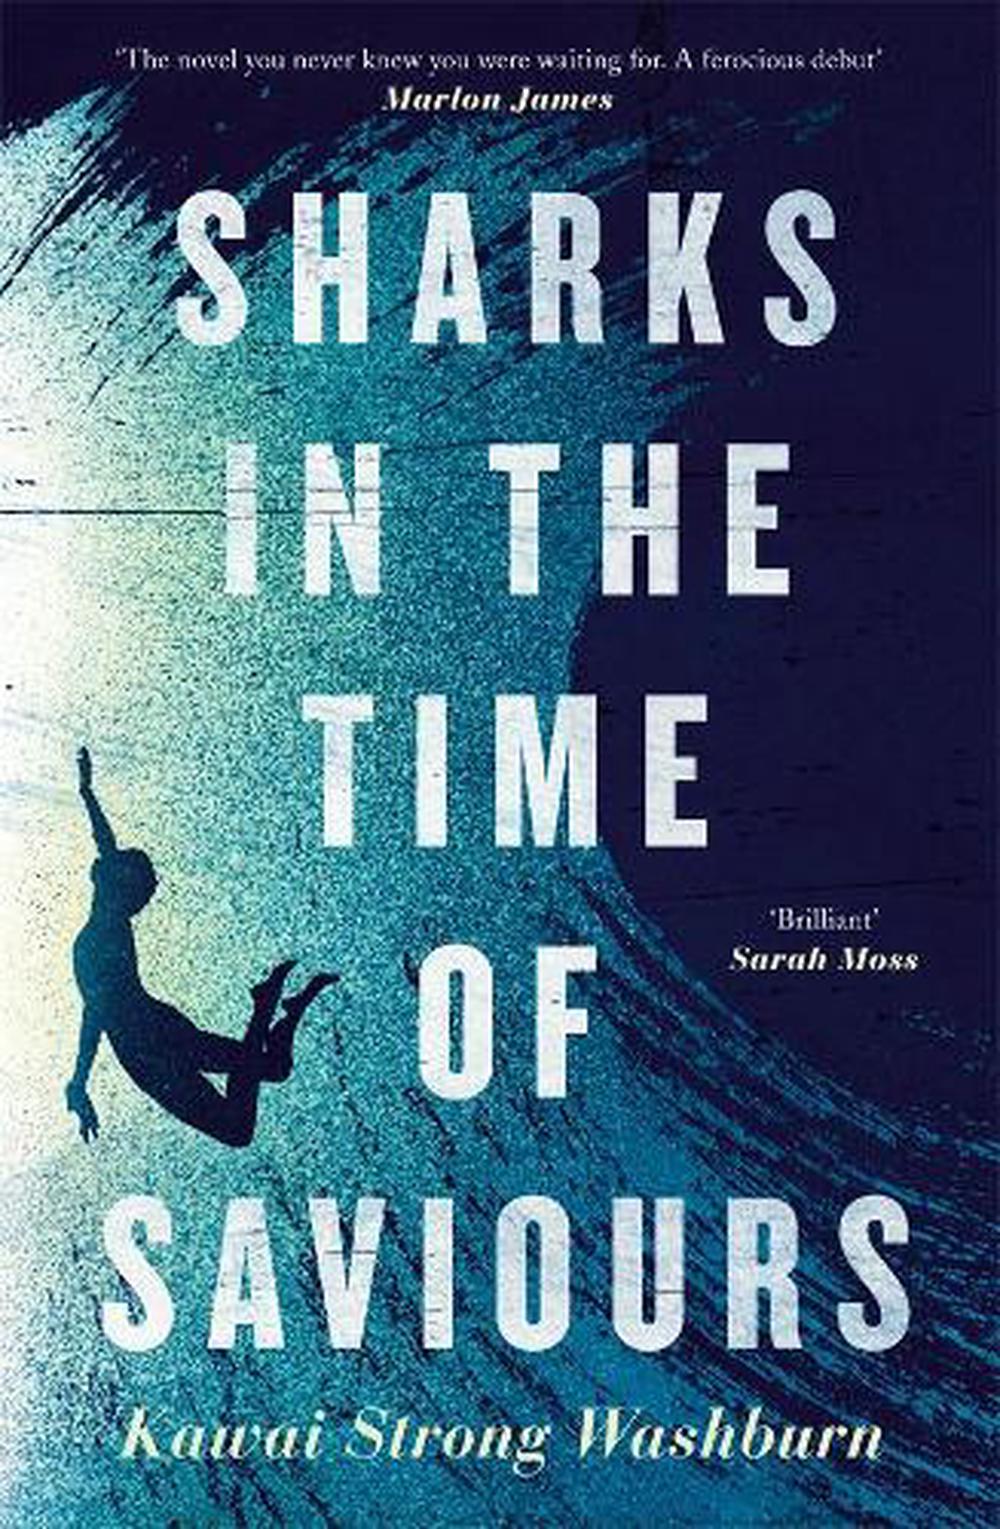 sharks in the time of saviors by kawai strong washburn